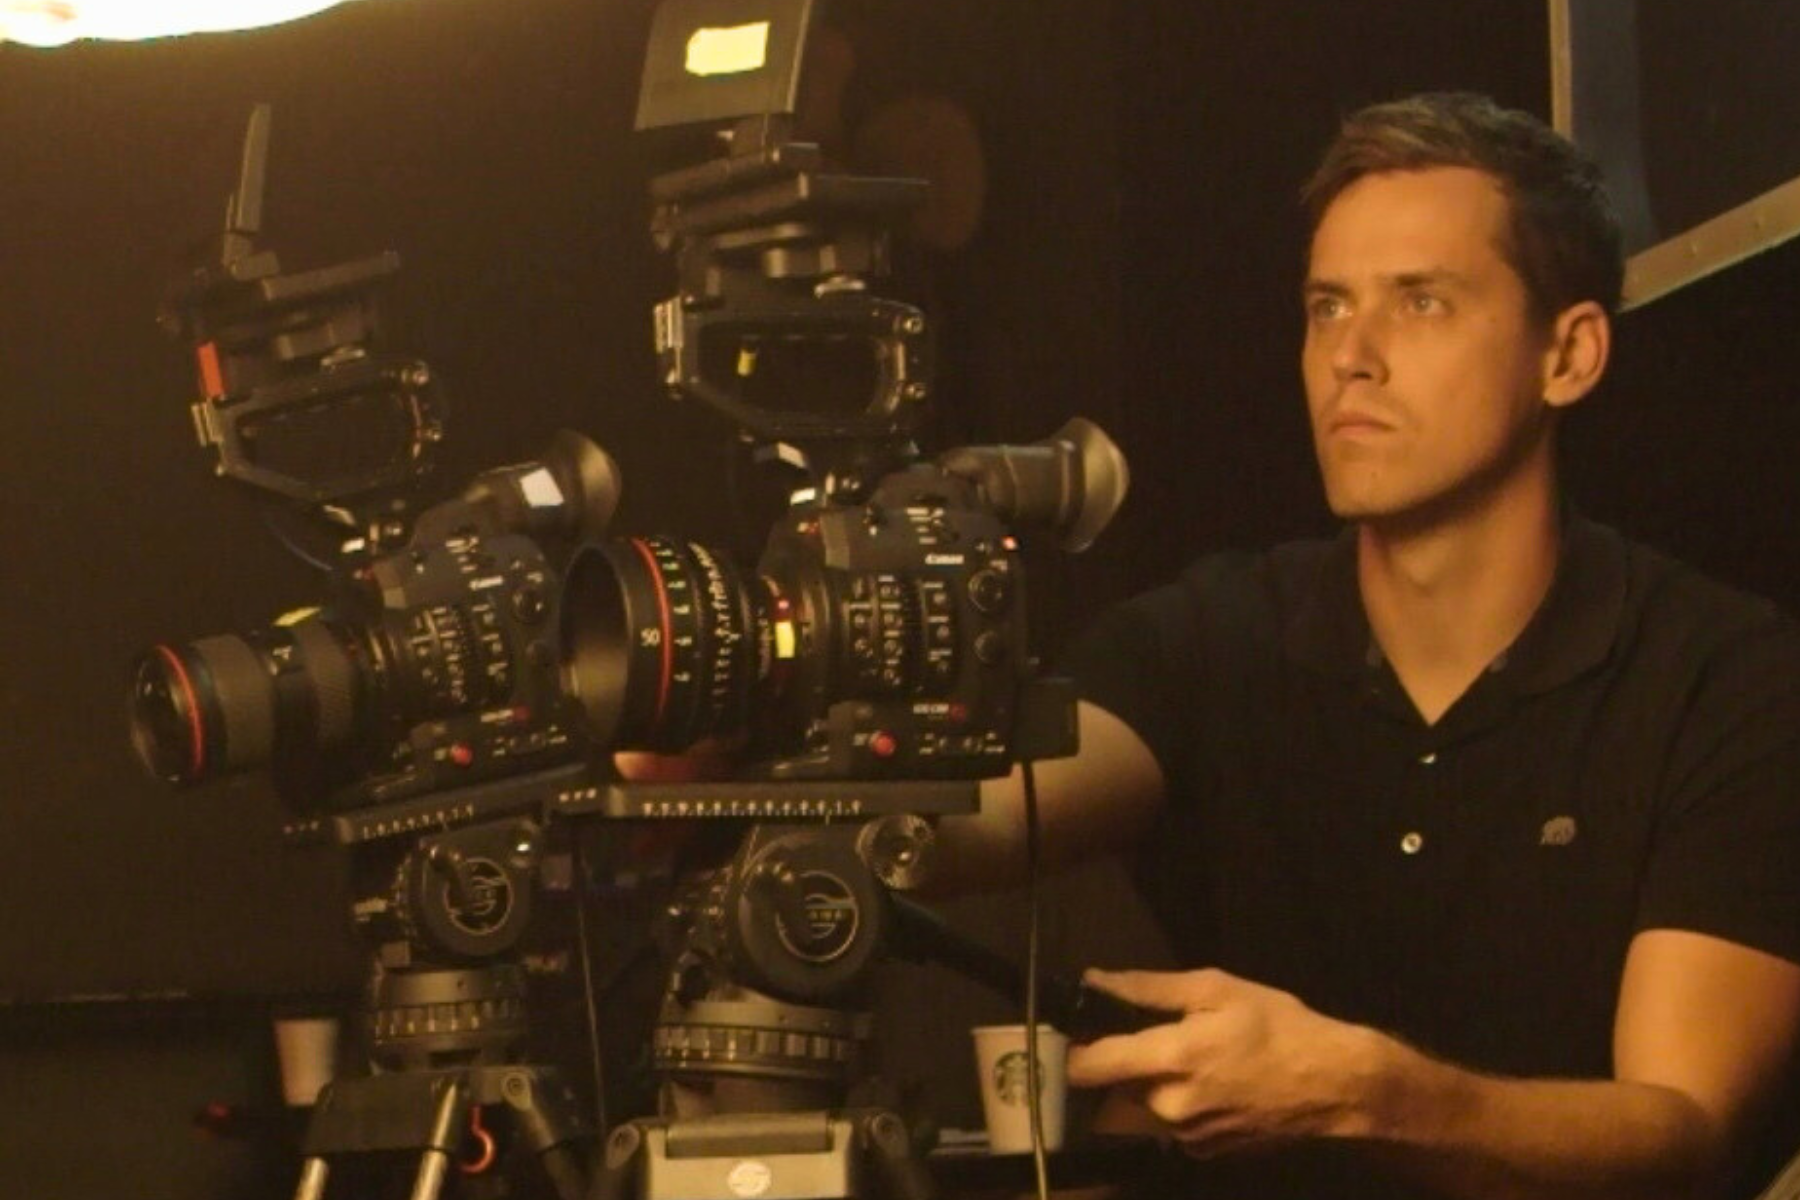 Jonathan Vogler working behind camera and film equipment